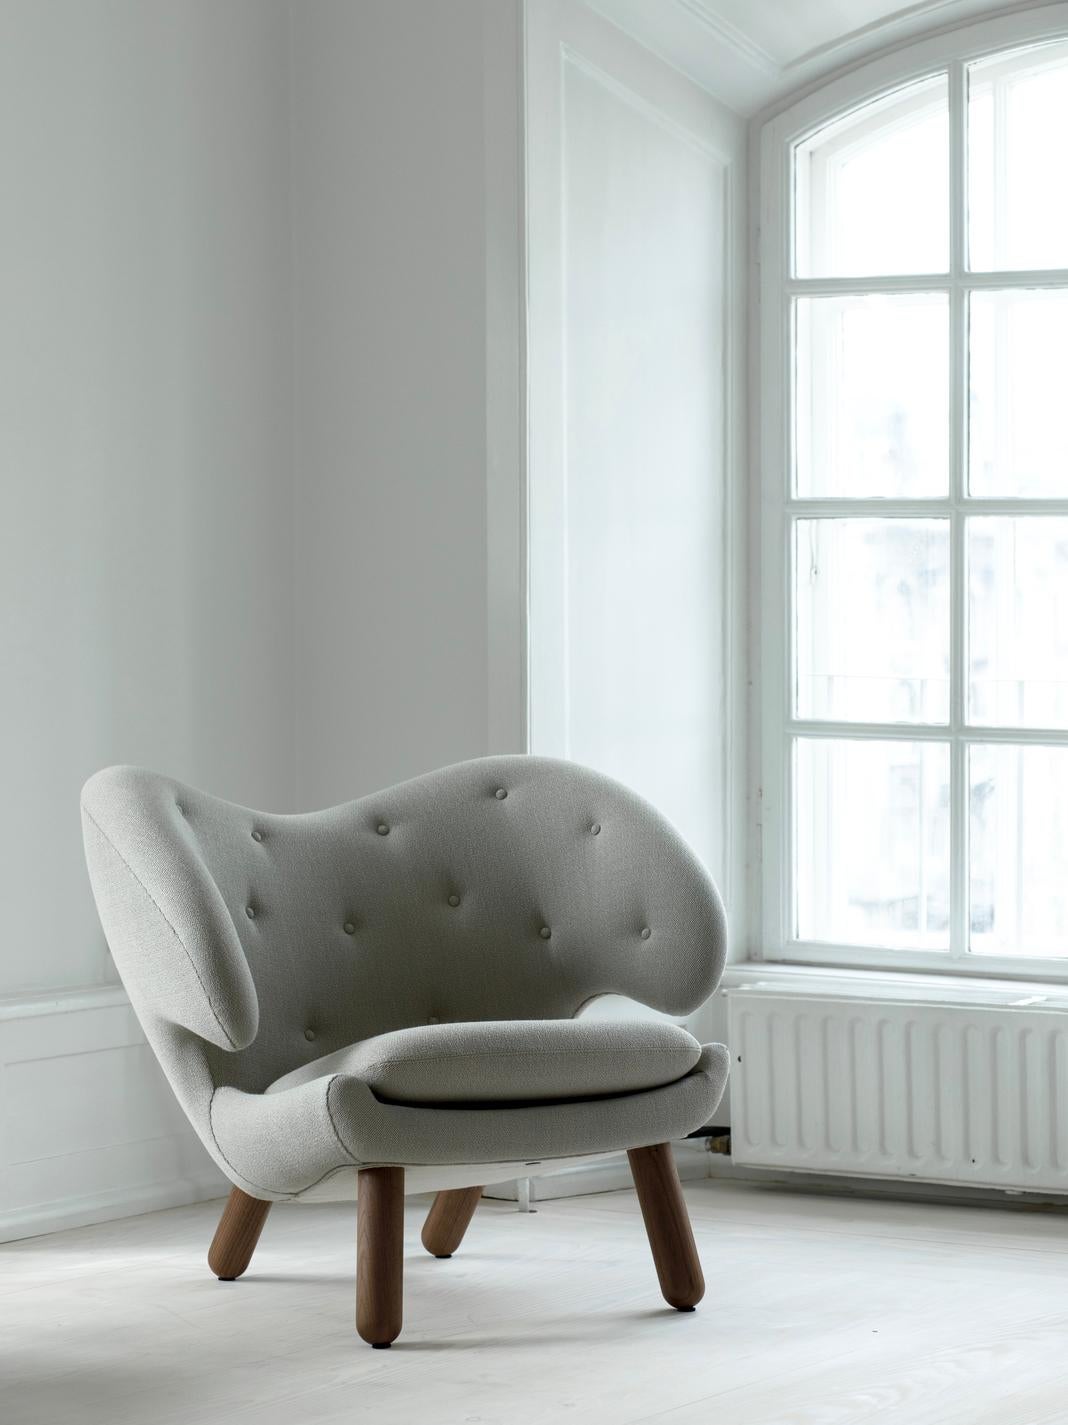 Finn Juhl Pelican Chair Upholstered in Fabric 1